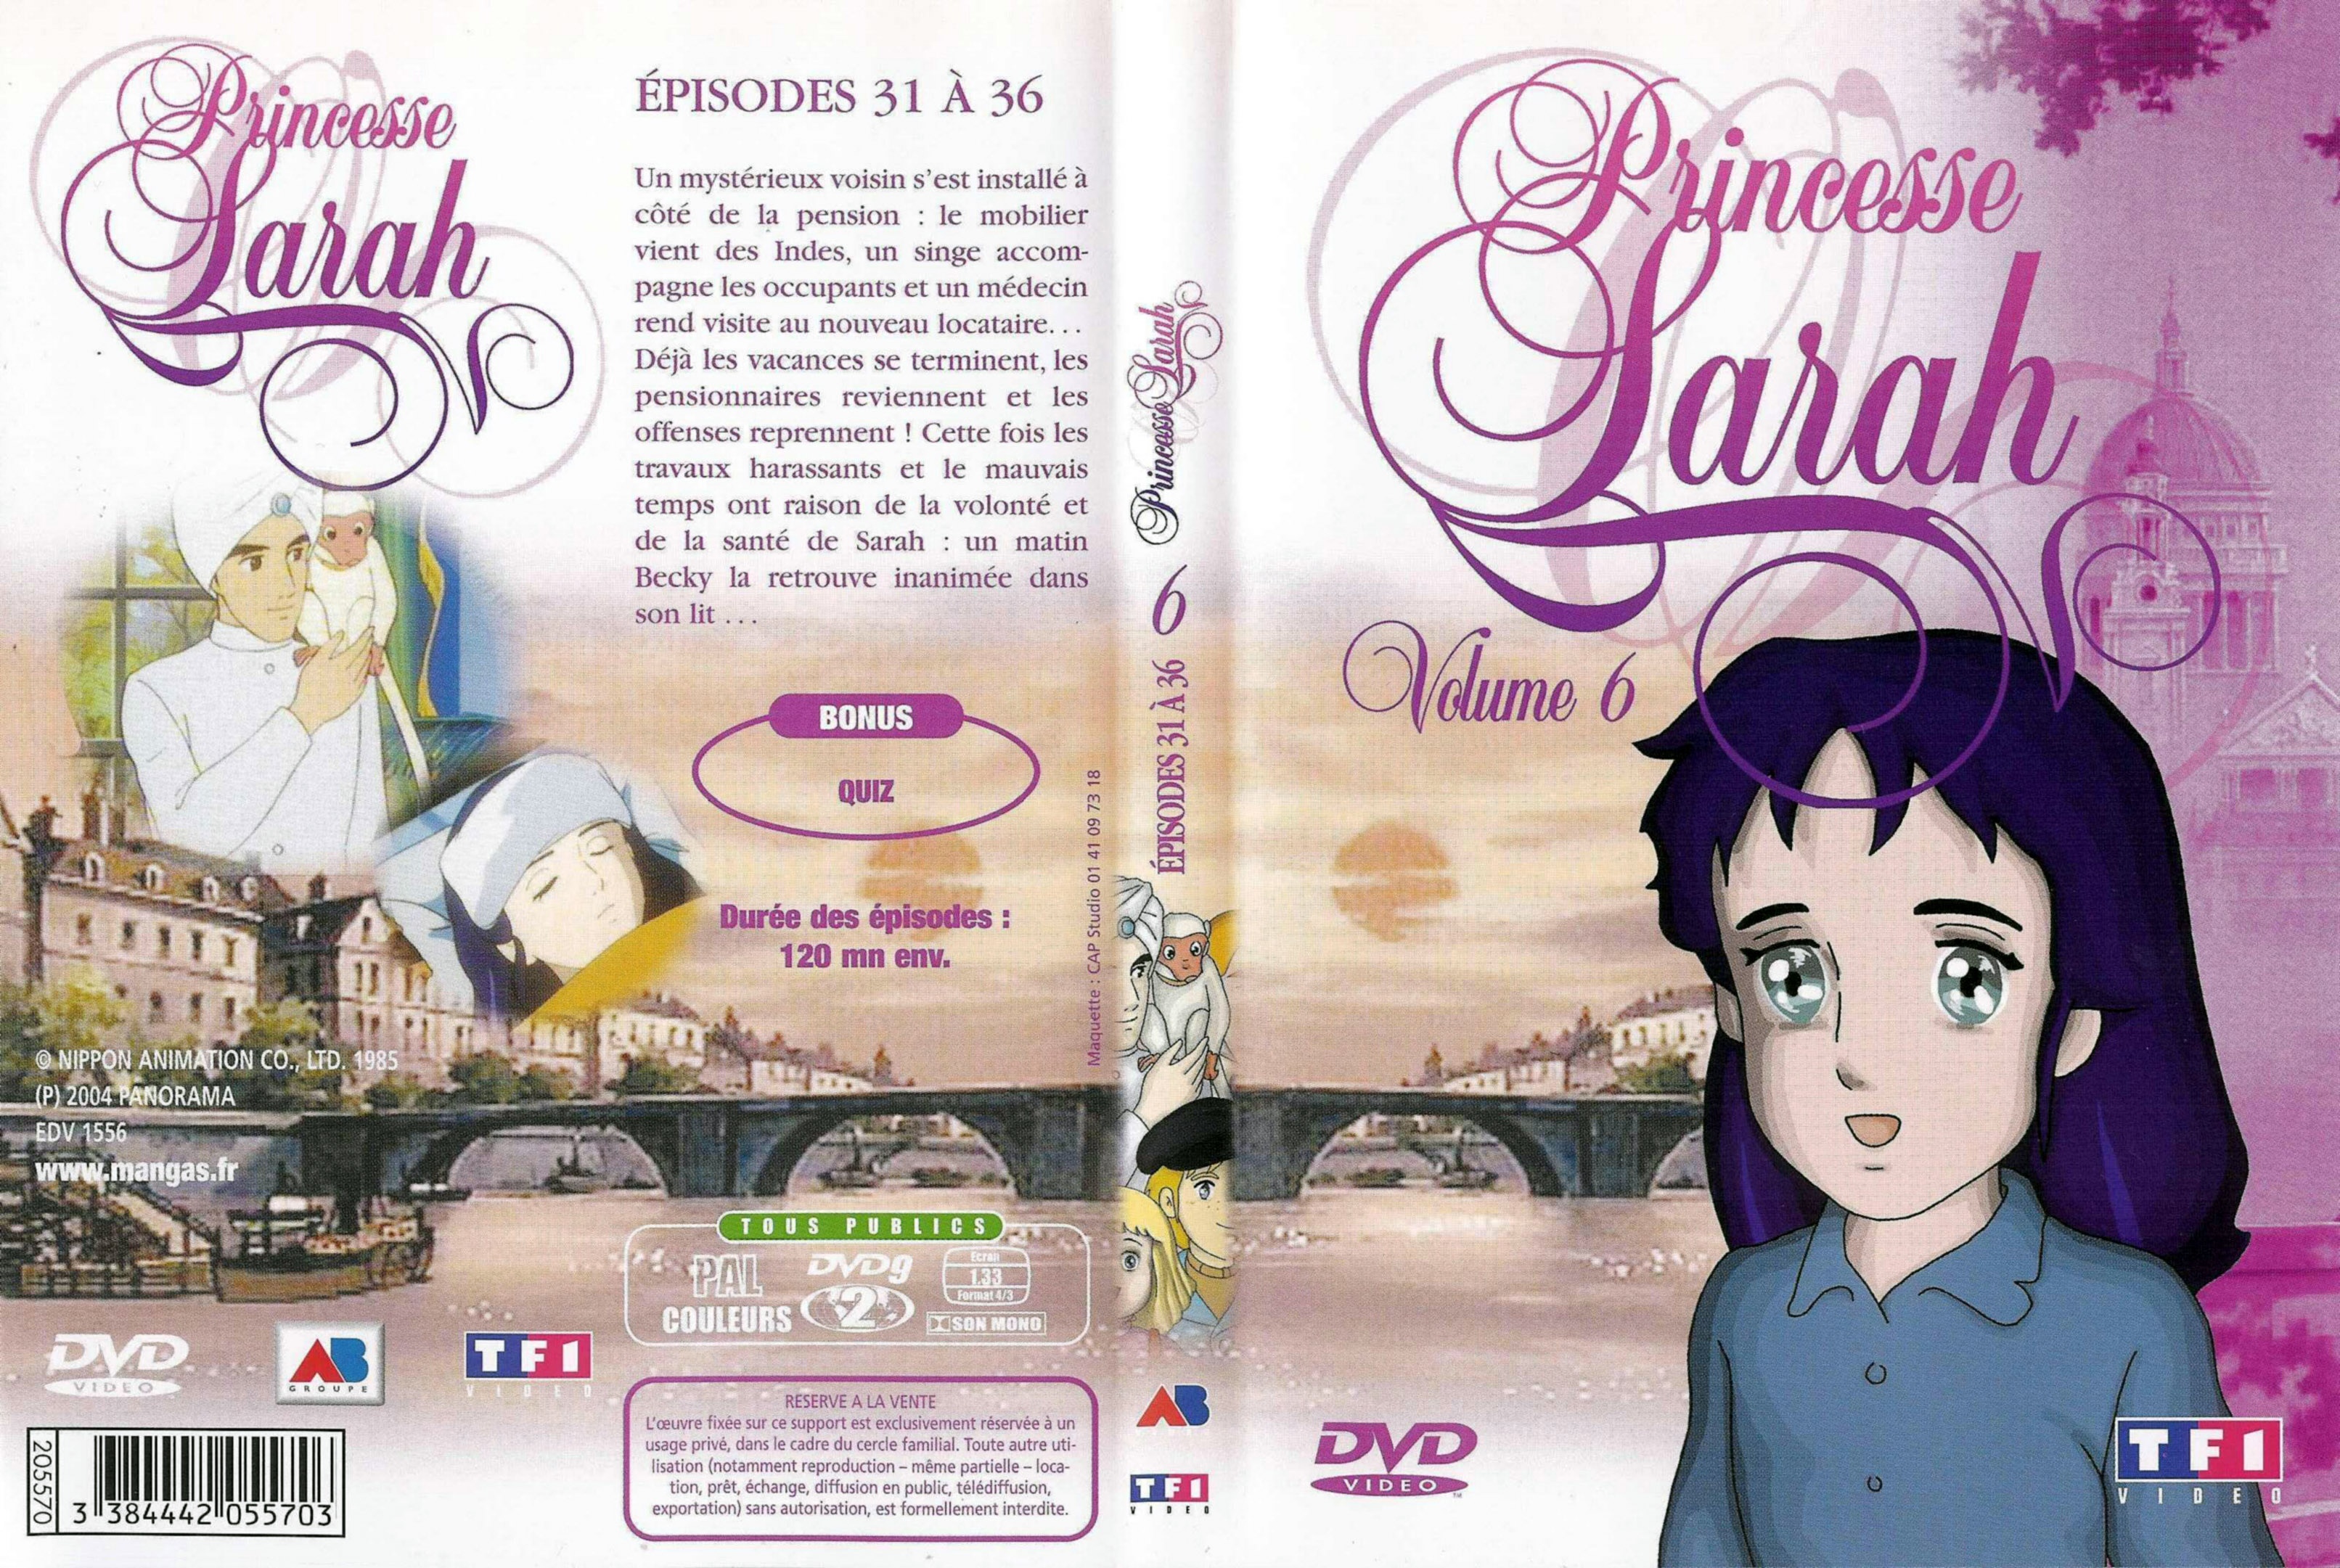 Jaquette DVD Princesse Sarah vol 6